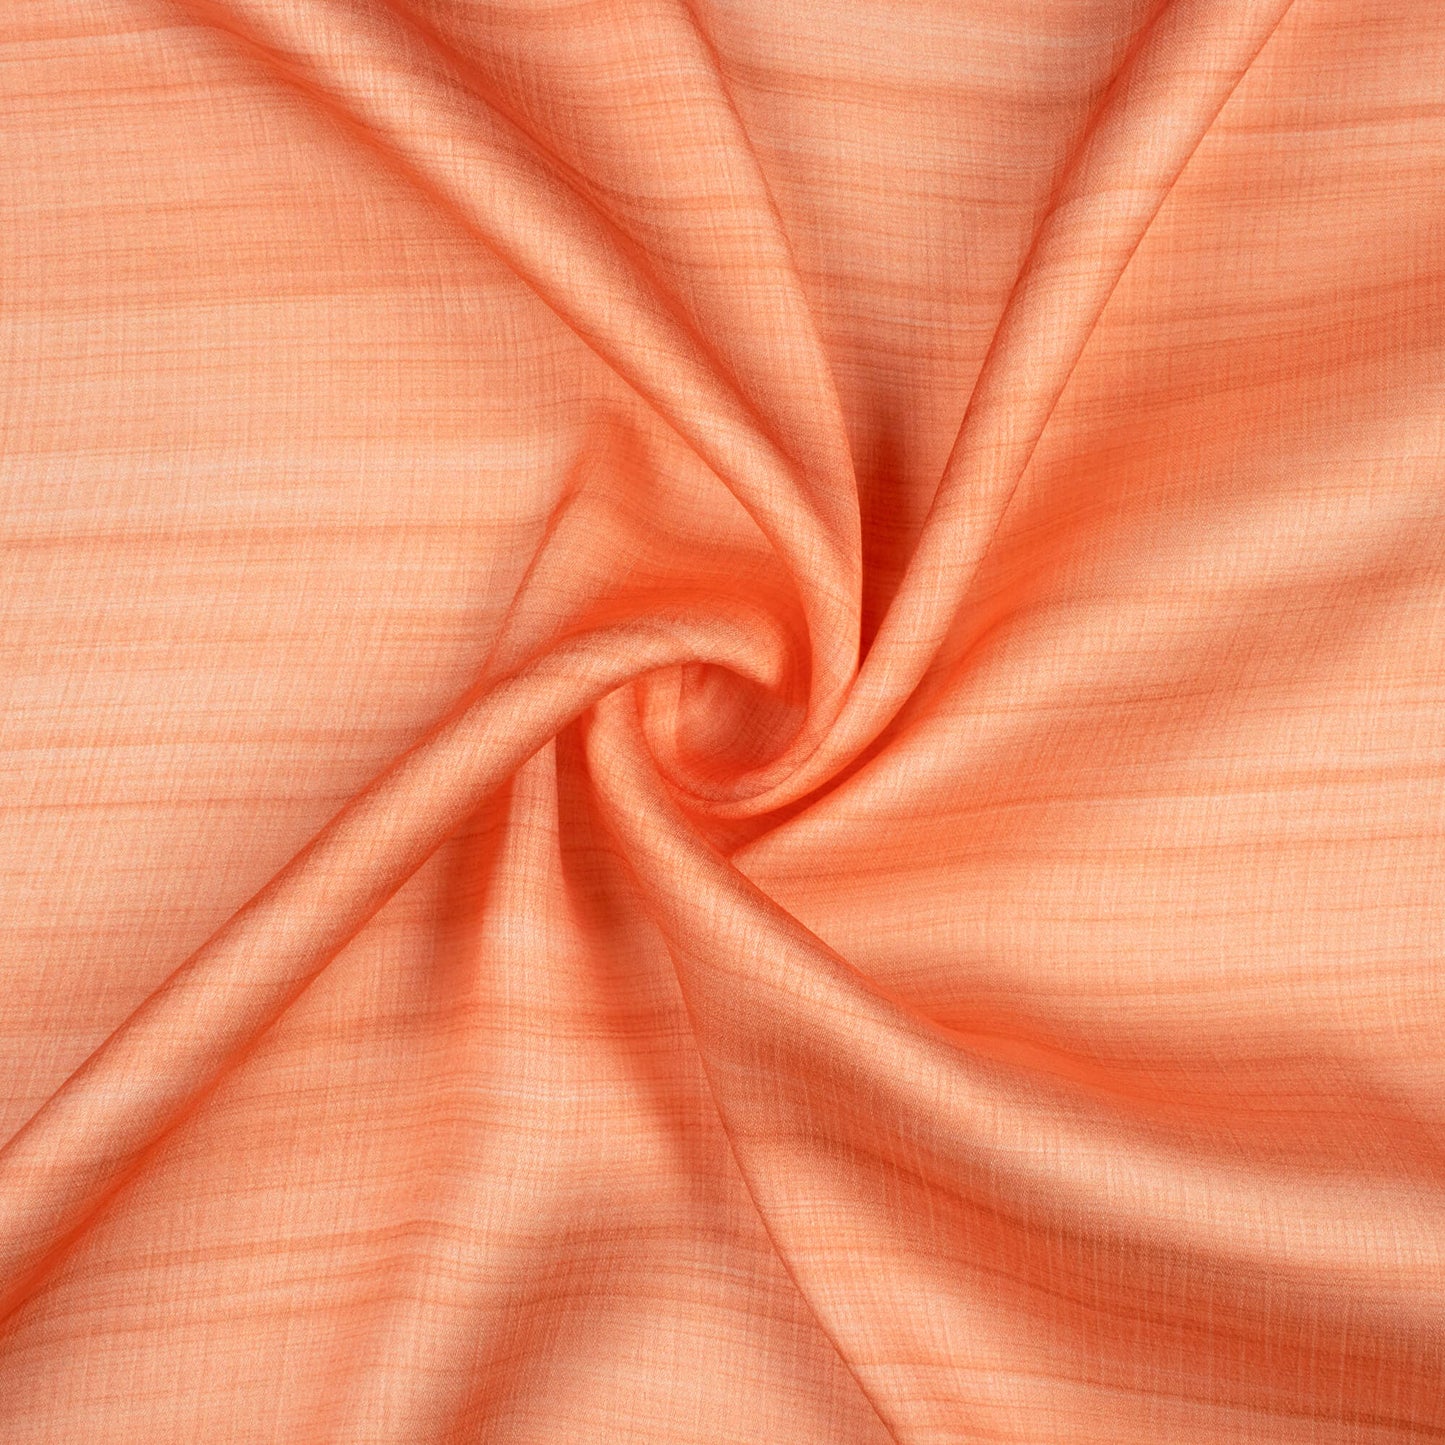 Salmon Orange Texture Pattern Digital Print Chiffon Satin Fabric